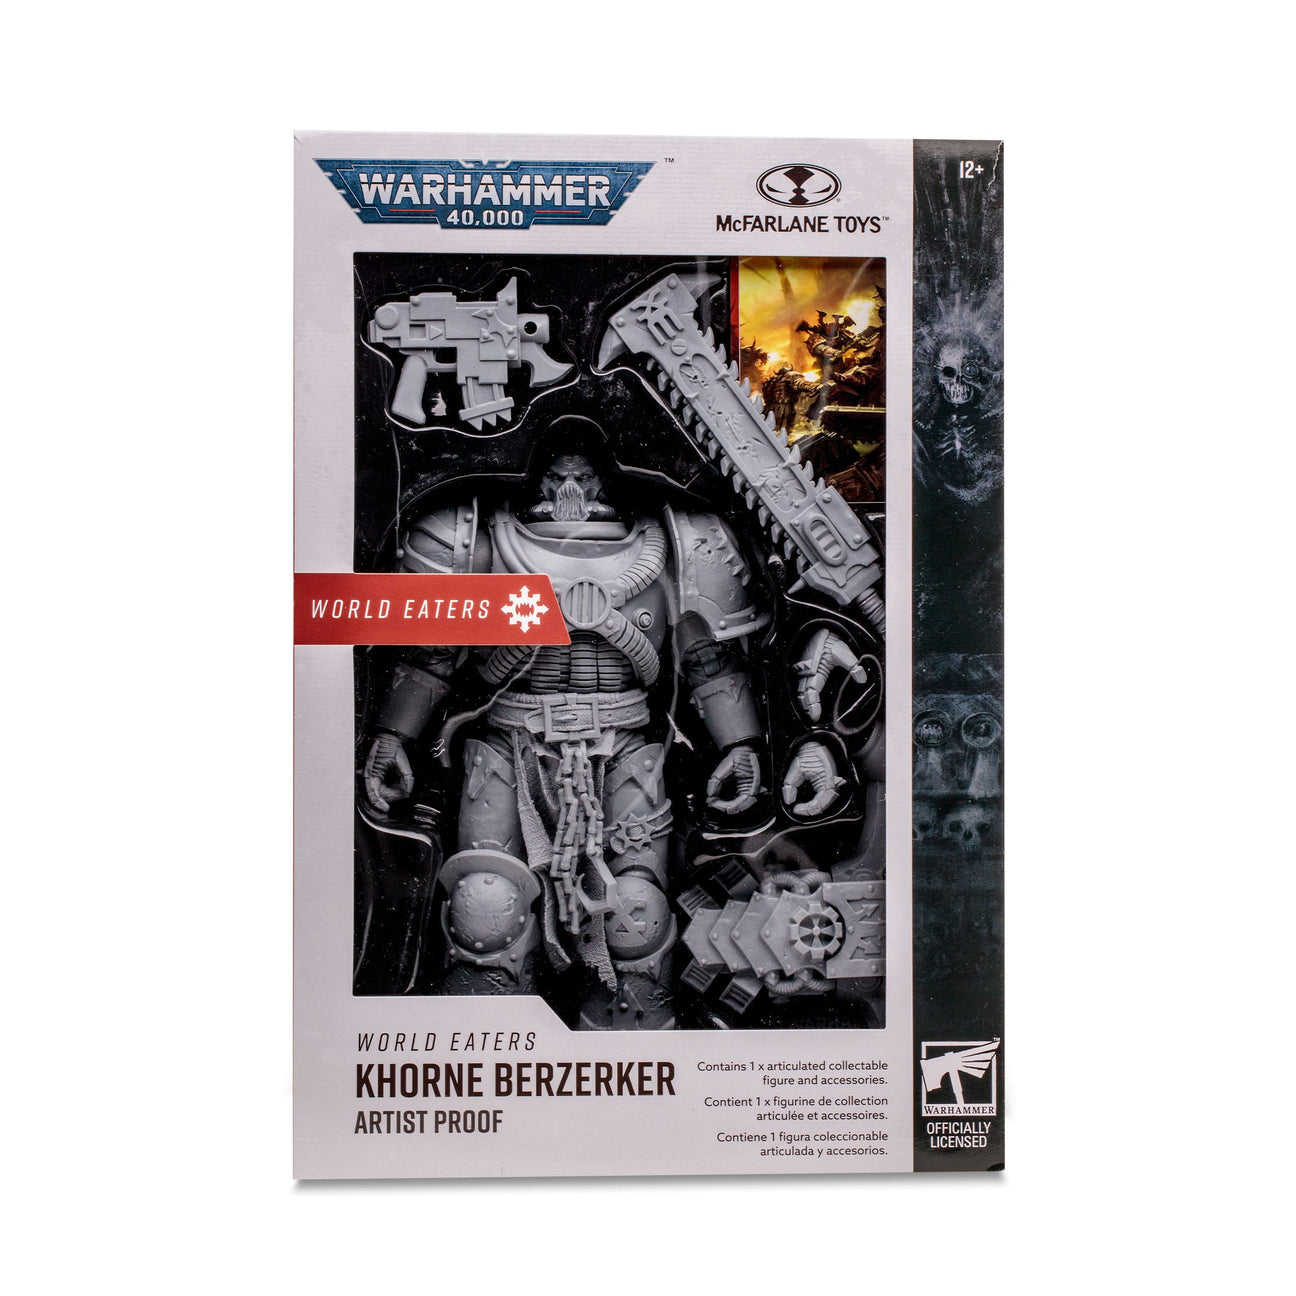 Warhammer 40k: Chaos Space Marines World Eaters Khorne Berzerker (Artist Proof)-Actionfiguren-McFarlane Toys-Mighty Underground